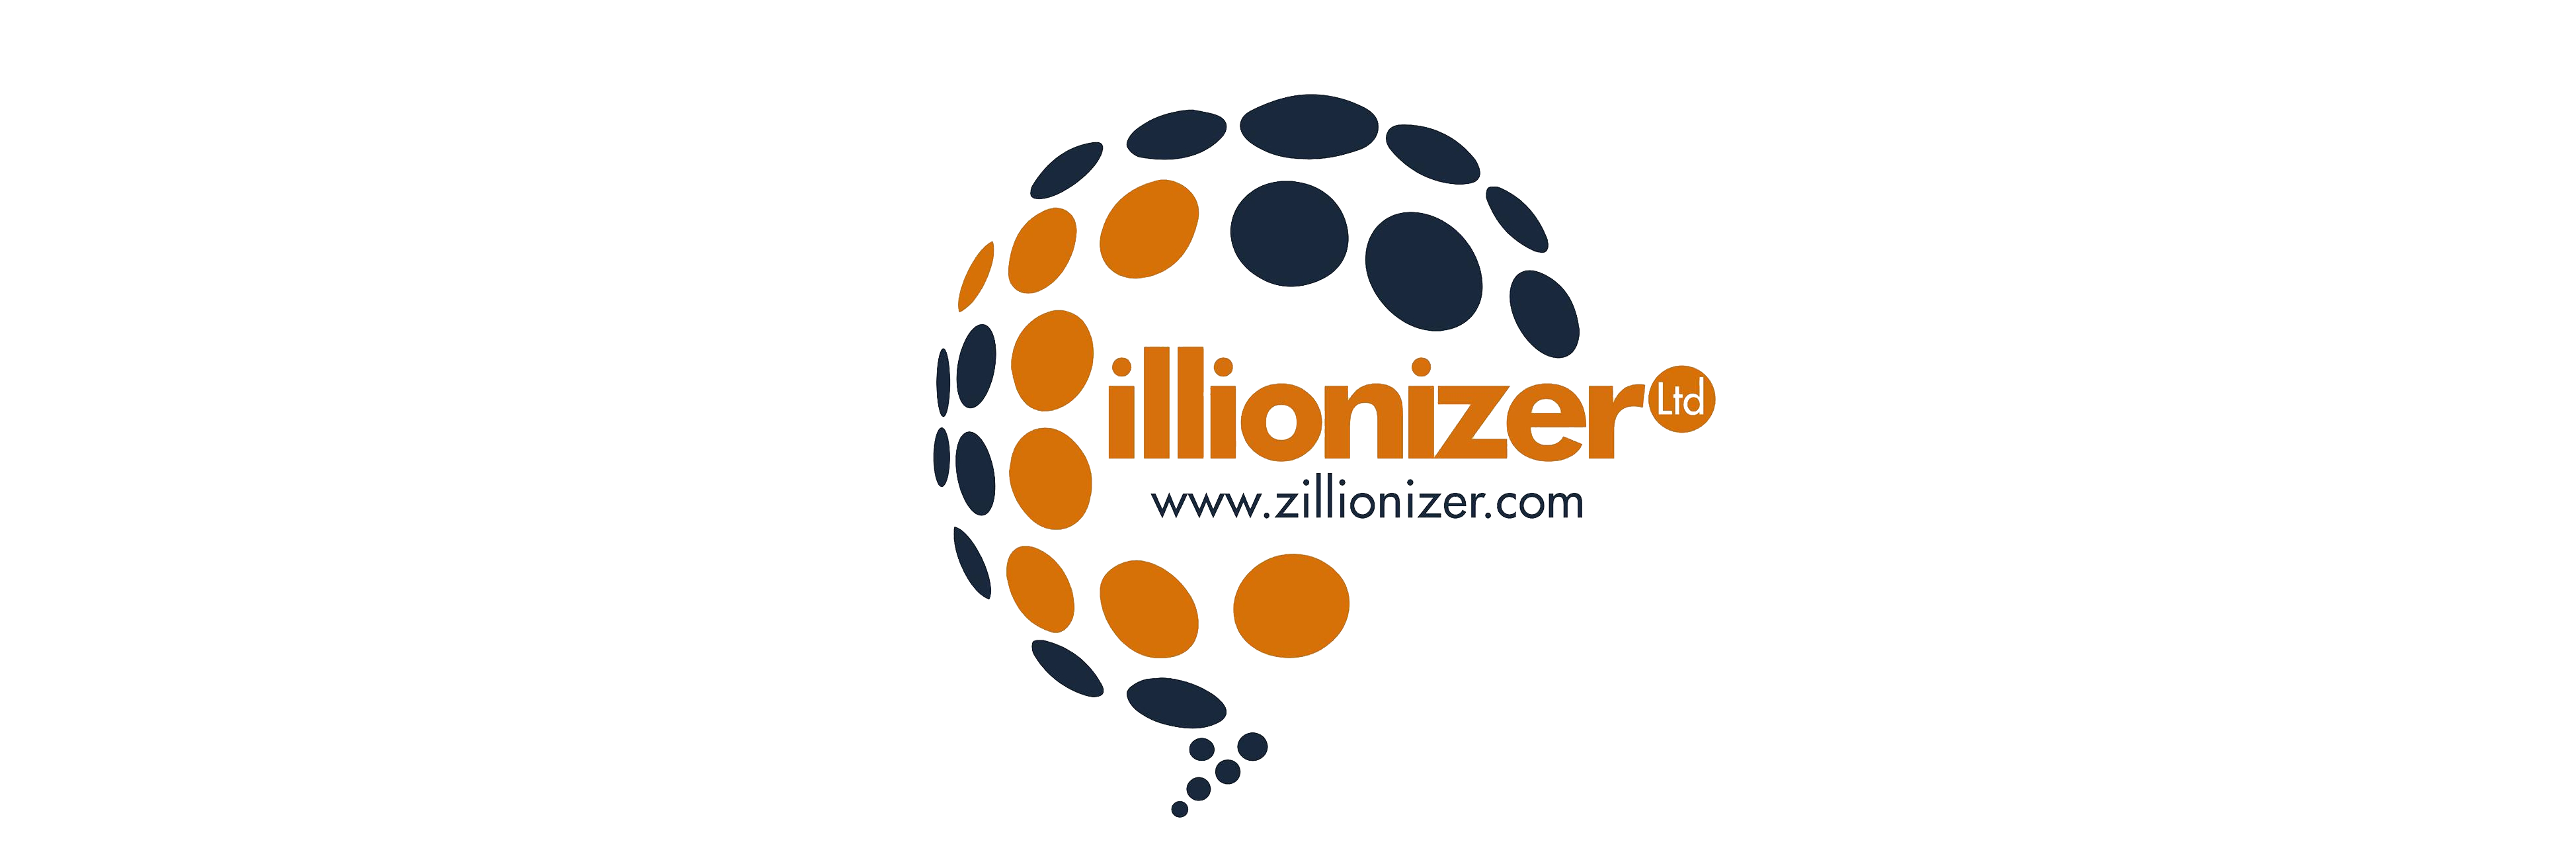 Zillionizer Ltd.